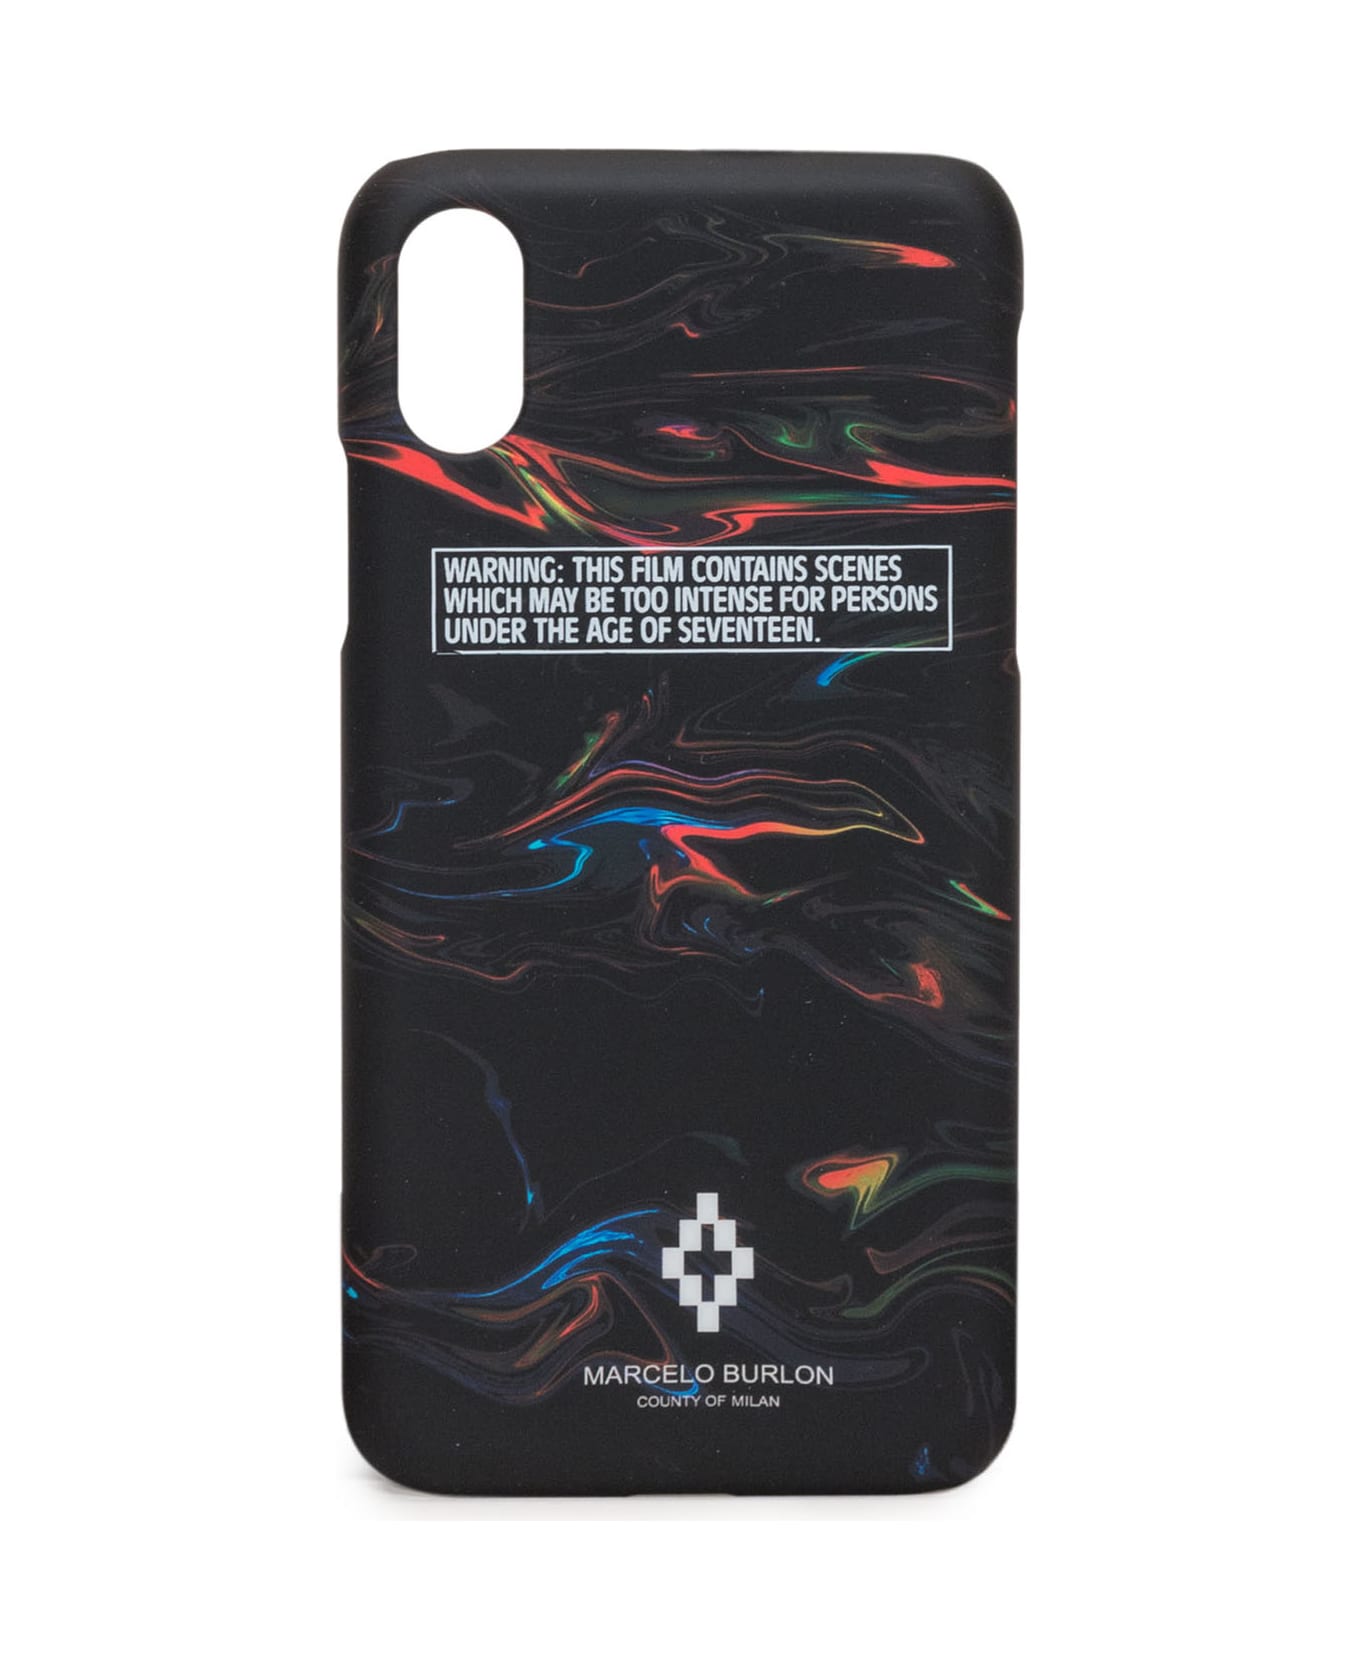 Marcelo Burlon Iphone X Case - NERO